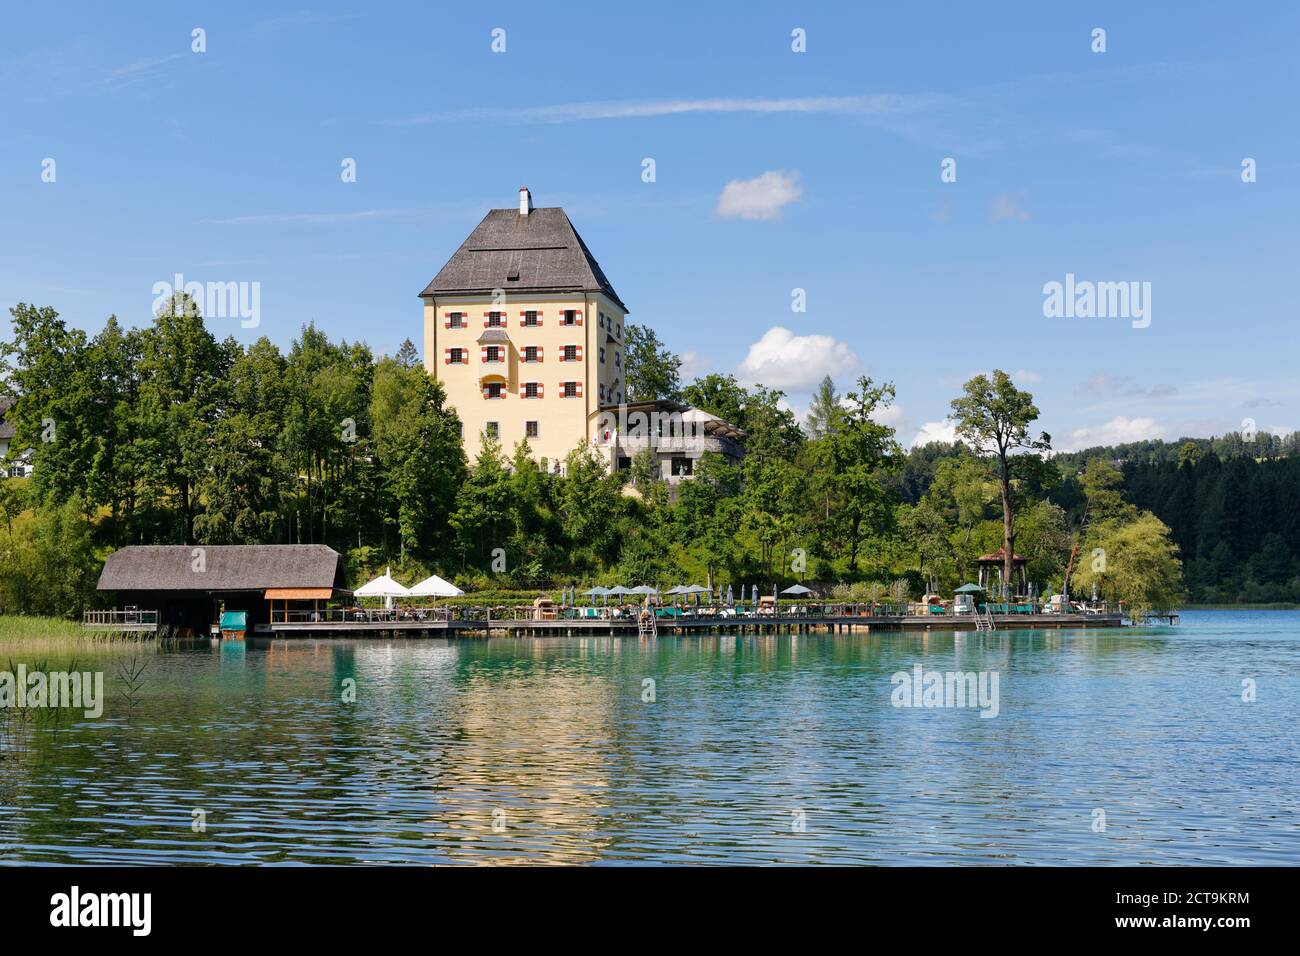 Austria, Salzburg State, Fuschlsee Lake, Fuschl am See, Fuschl Castle Stock Photo